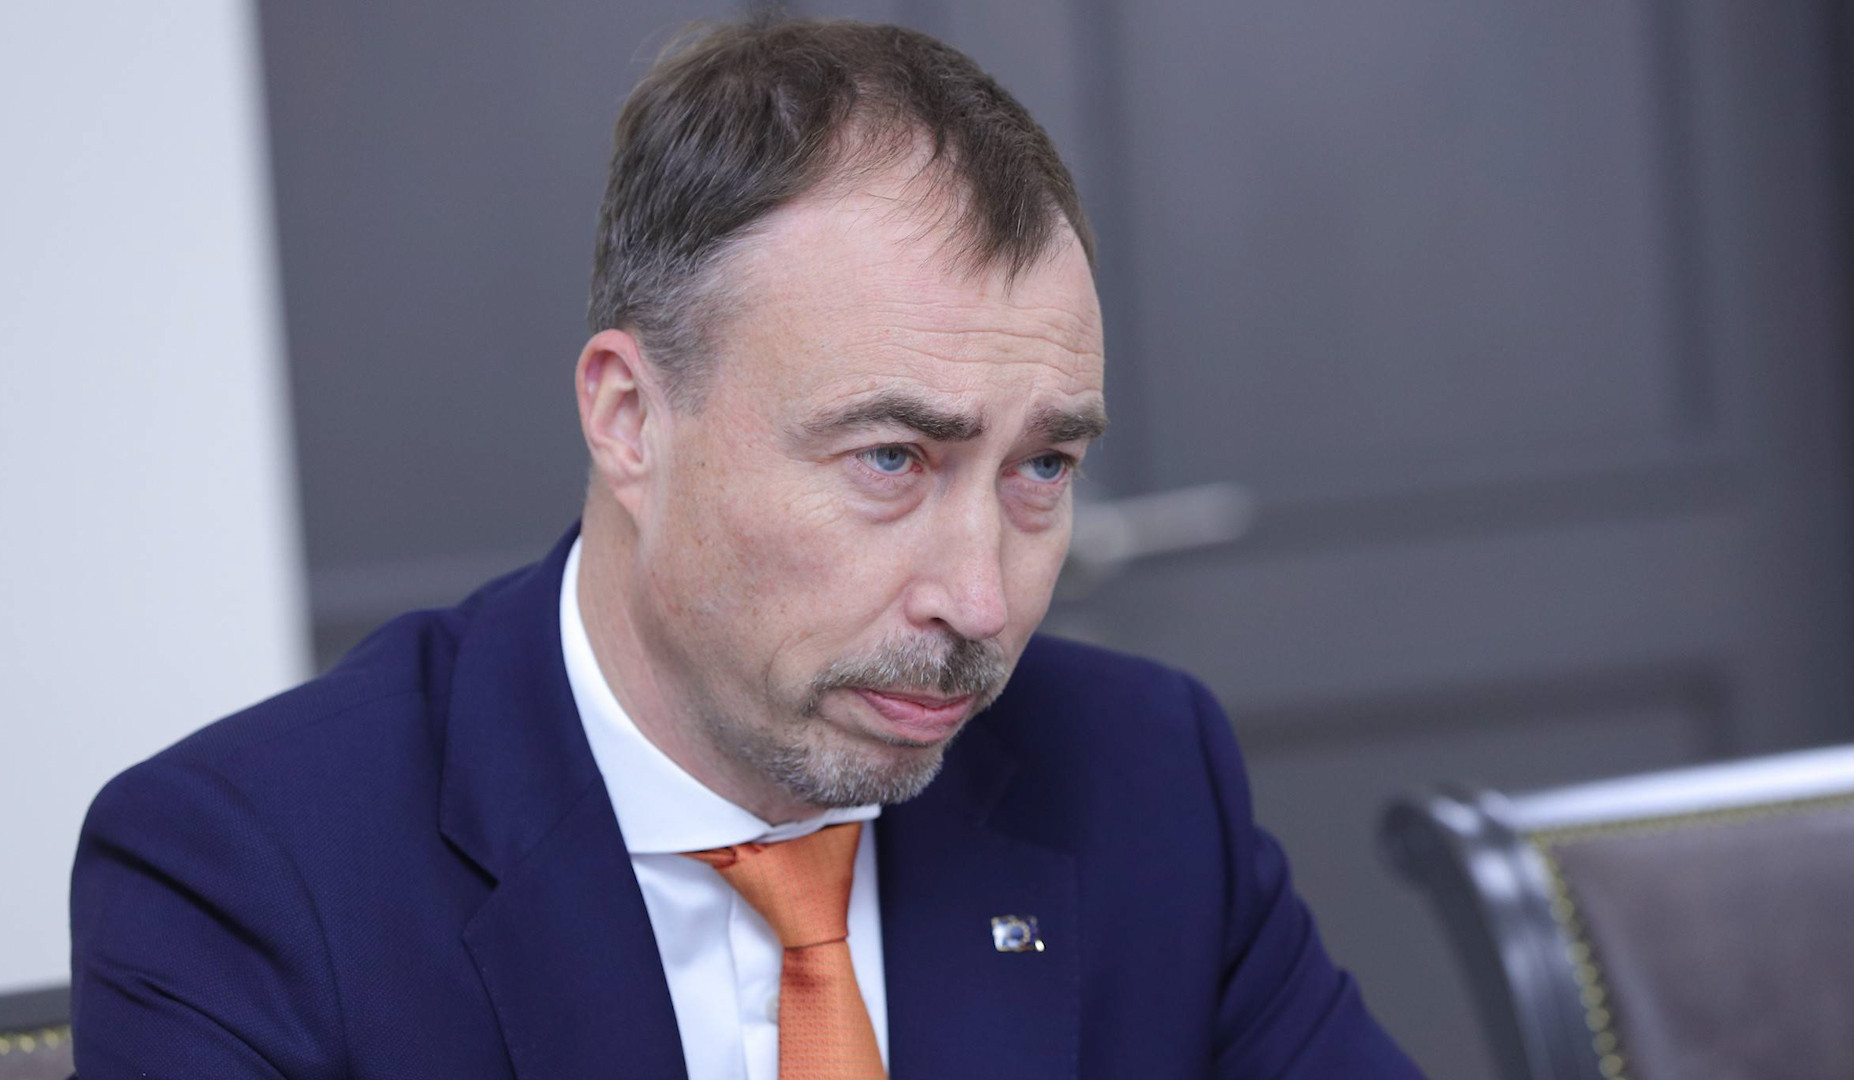 Klaar referred to work of EU Мission in Armenia